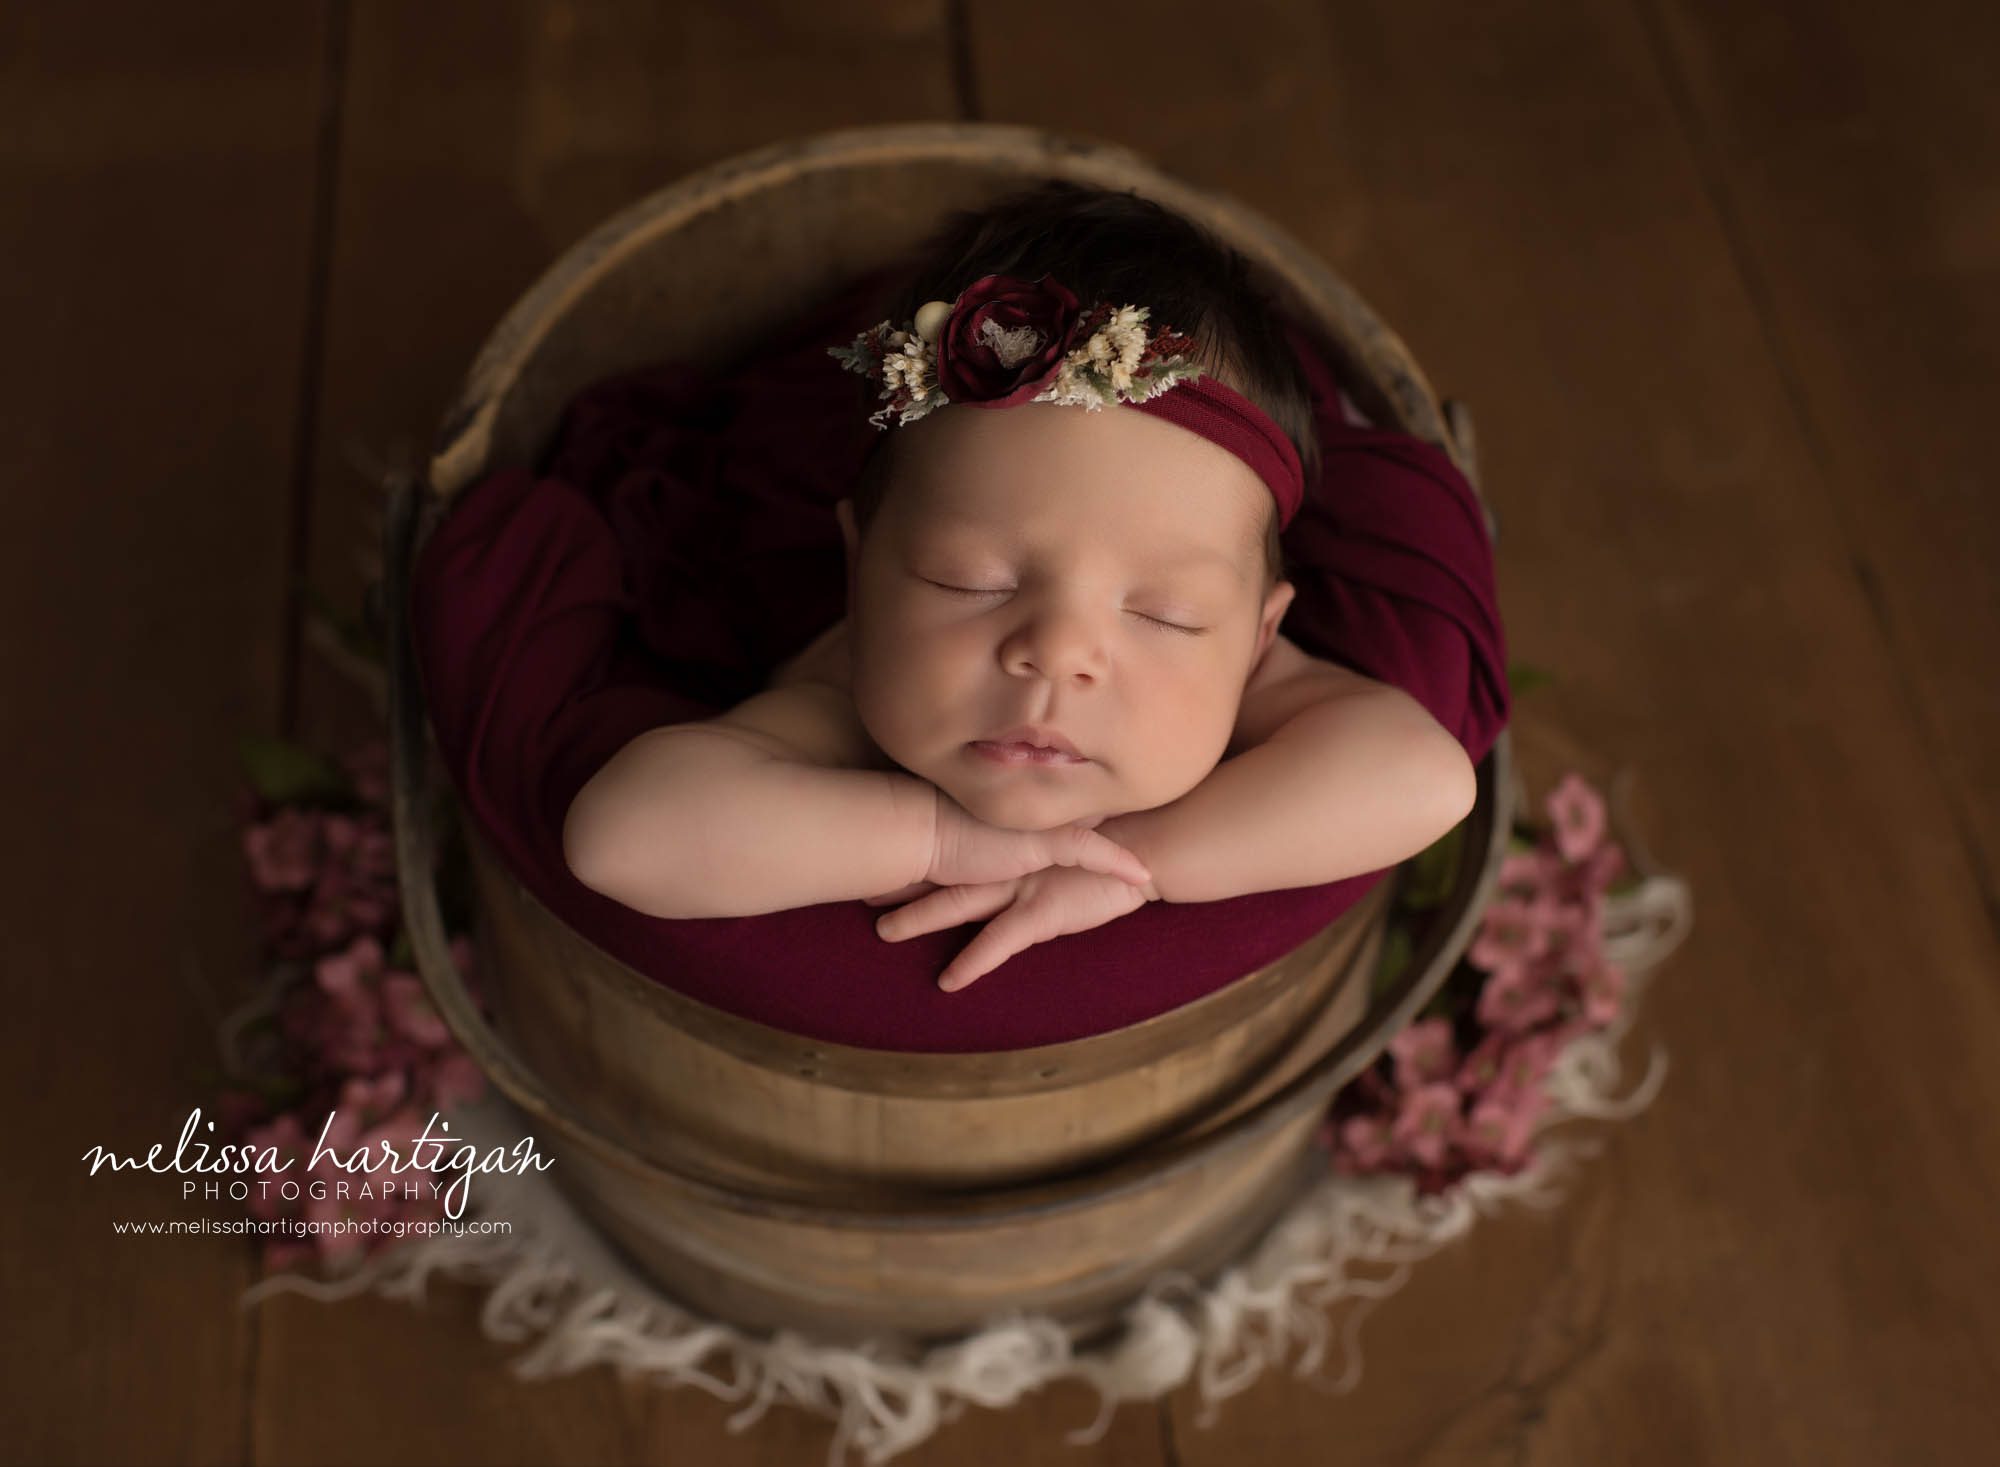 newborn baby girl posed in bucket wearing headband